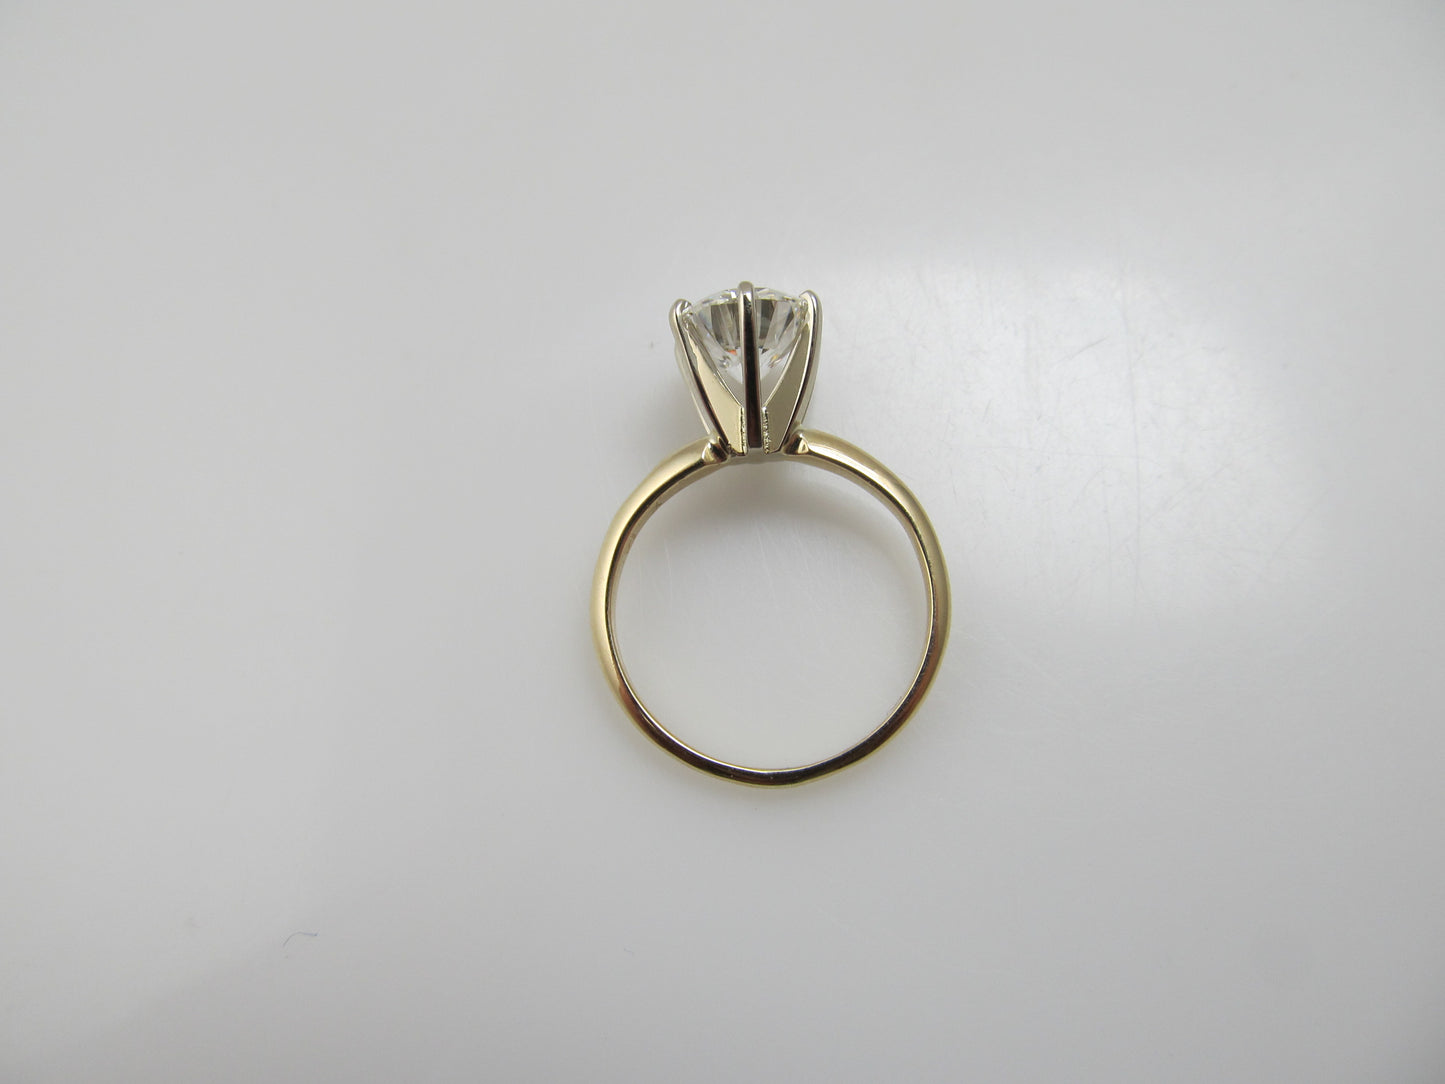 Classic tiffany set 1.94ct diamond engagement ring